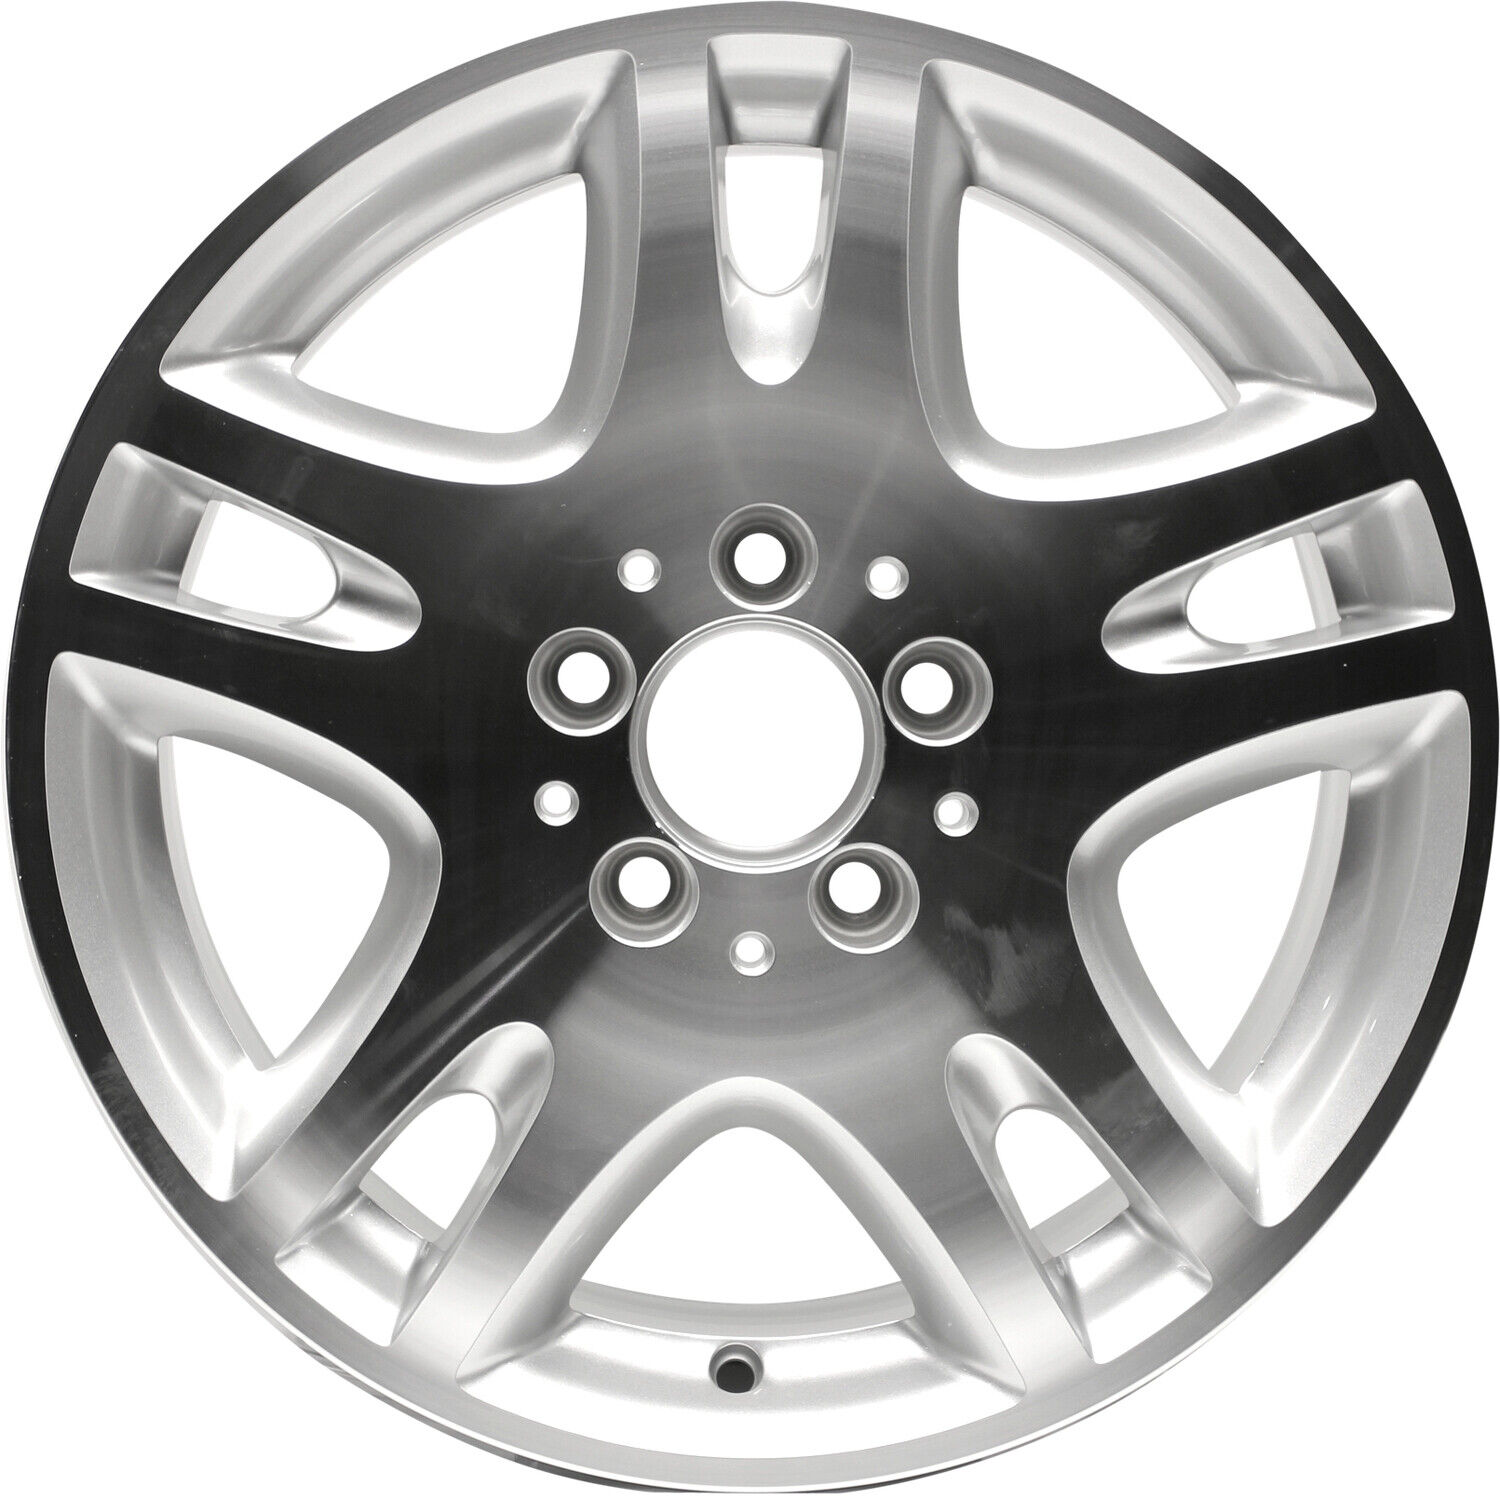 65295 Reconditioned OEM Aluminum Wheel 16x8 fits 2003-2007 Mercedes E320